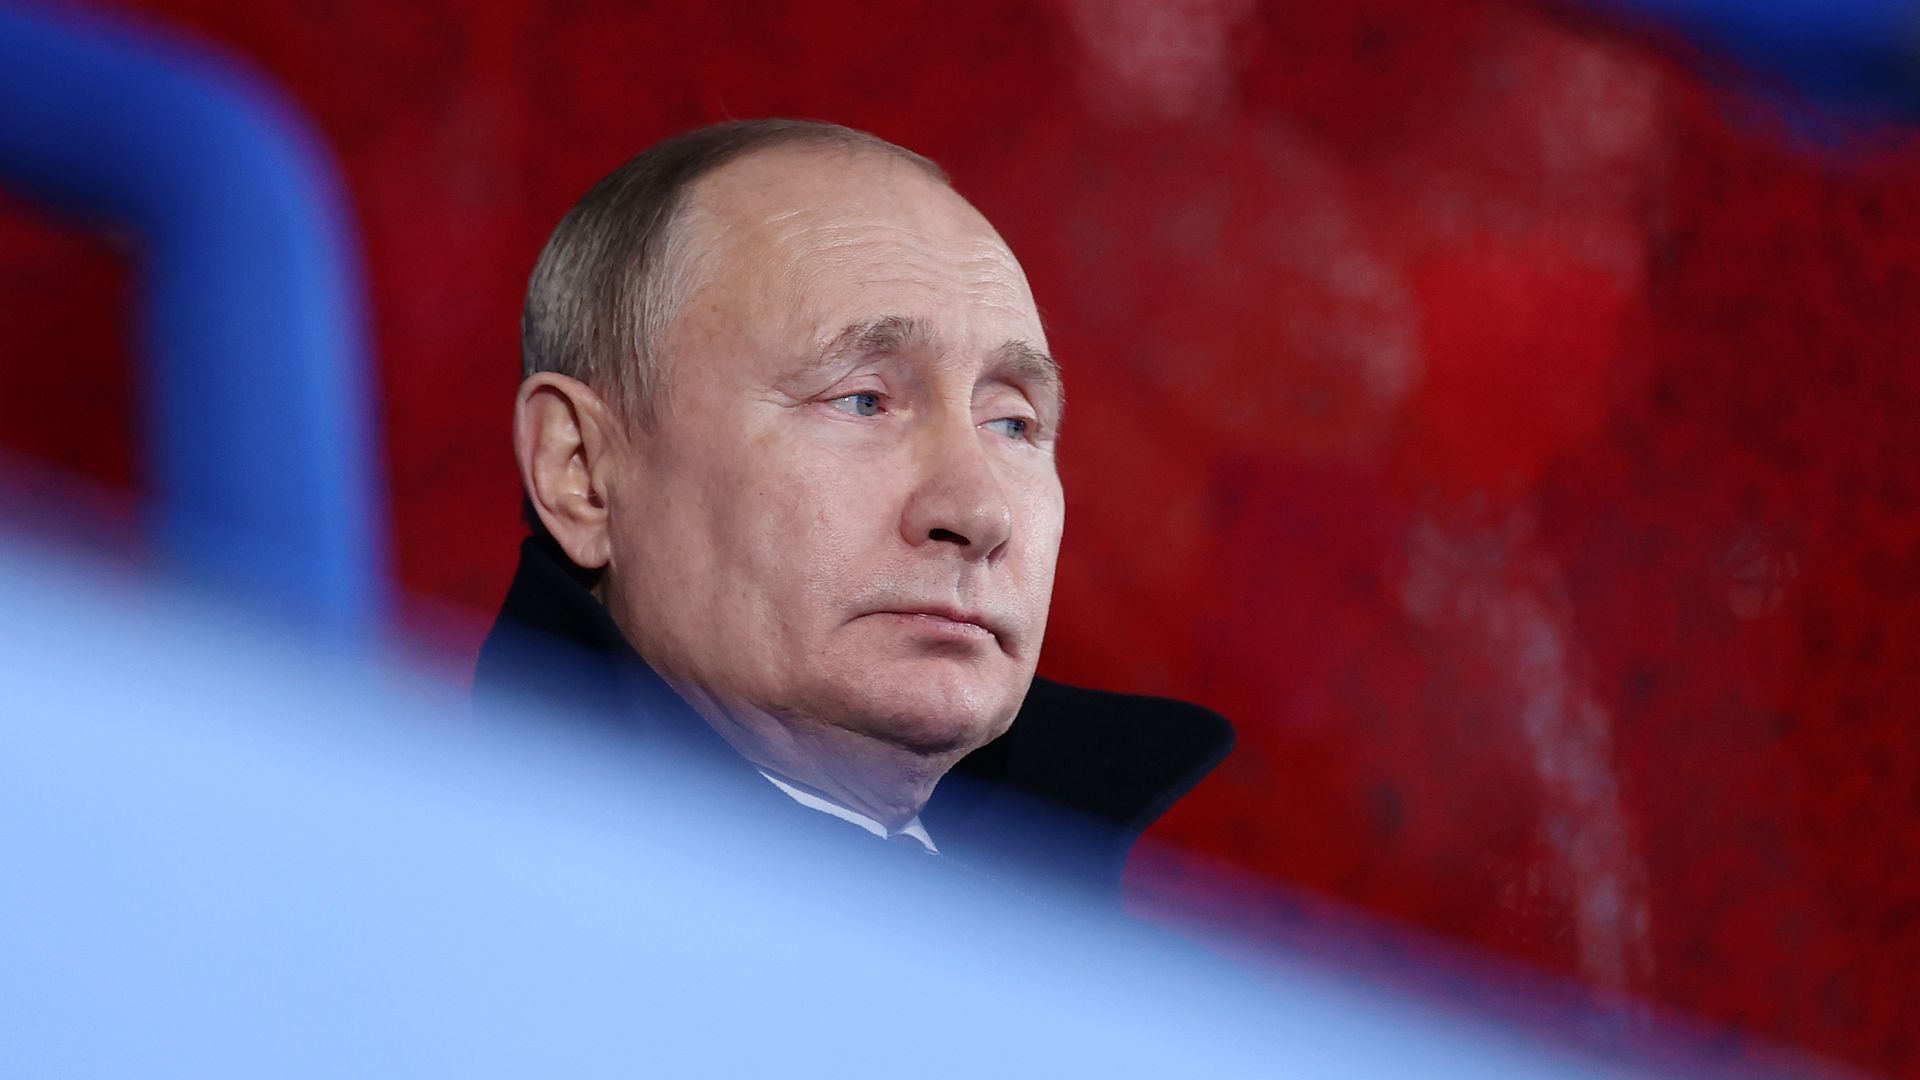 Photo of Vladimir Putin looking to his left